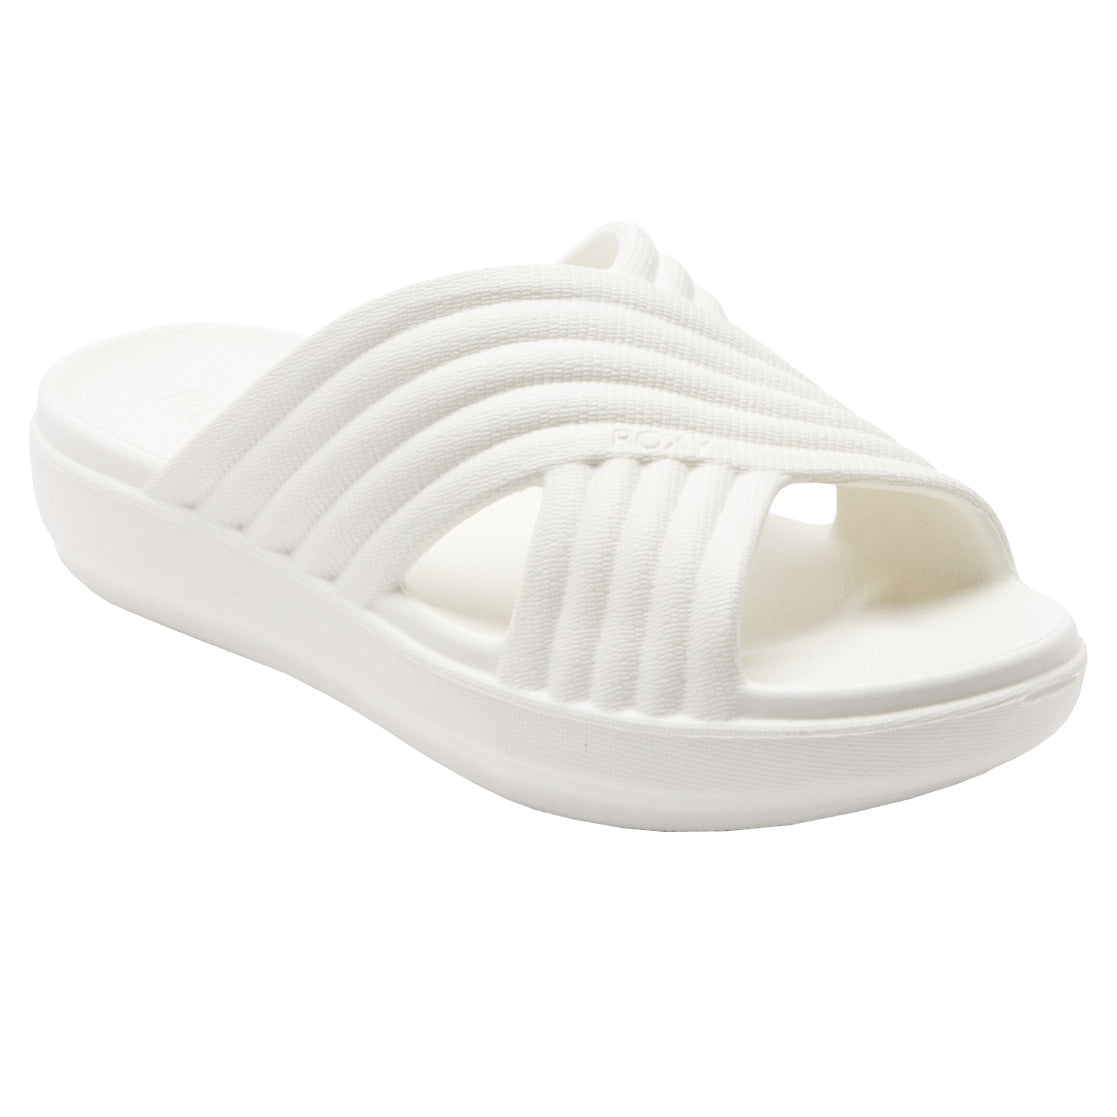 Roxy Rivie Womens Sandal WHT-White 5